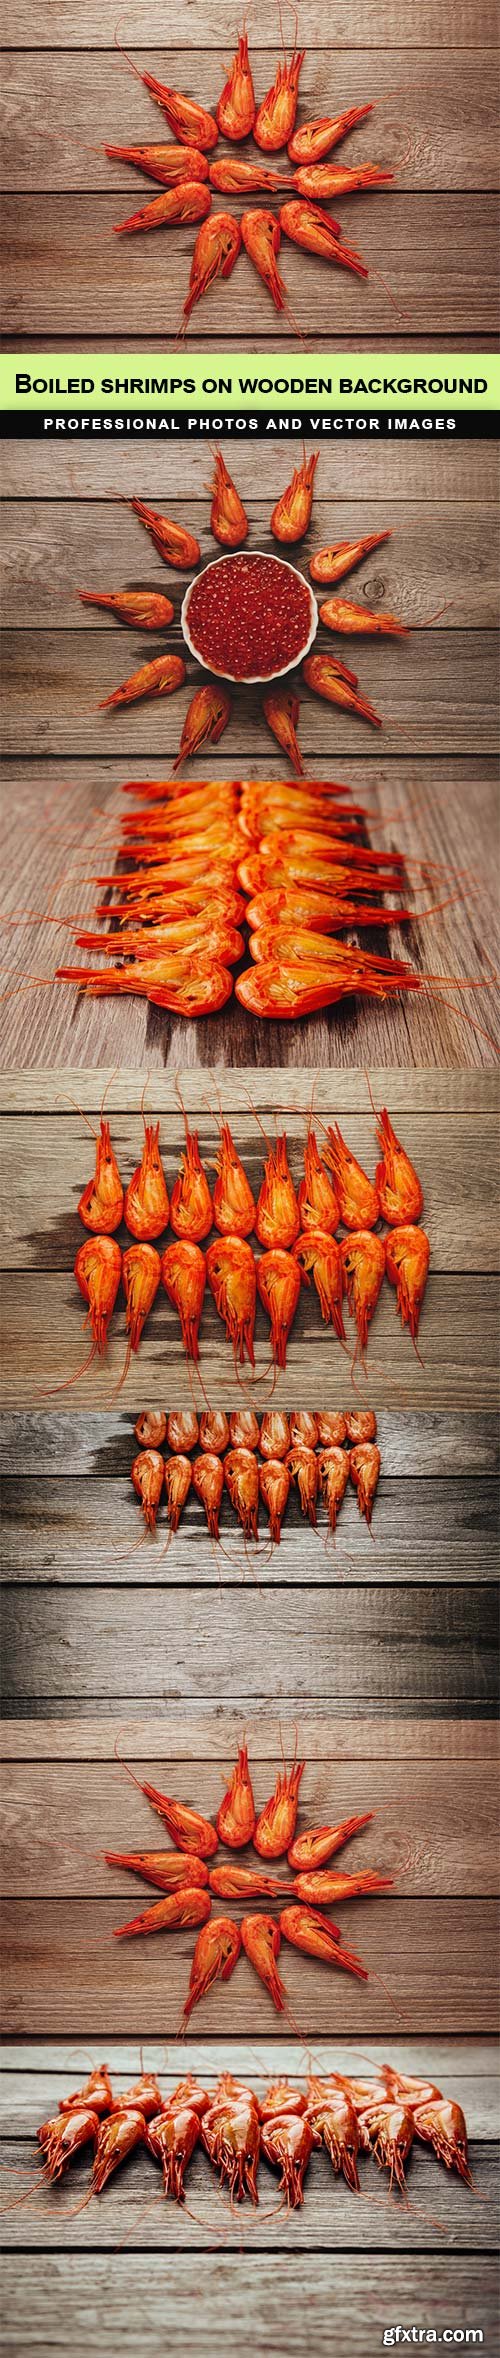 Boiled shrimps on wooden background - 6 UHQ JPEG